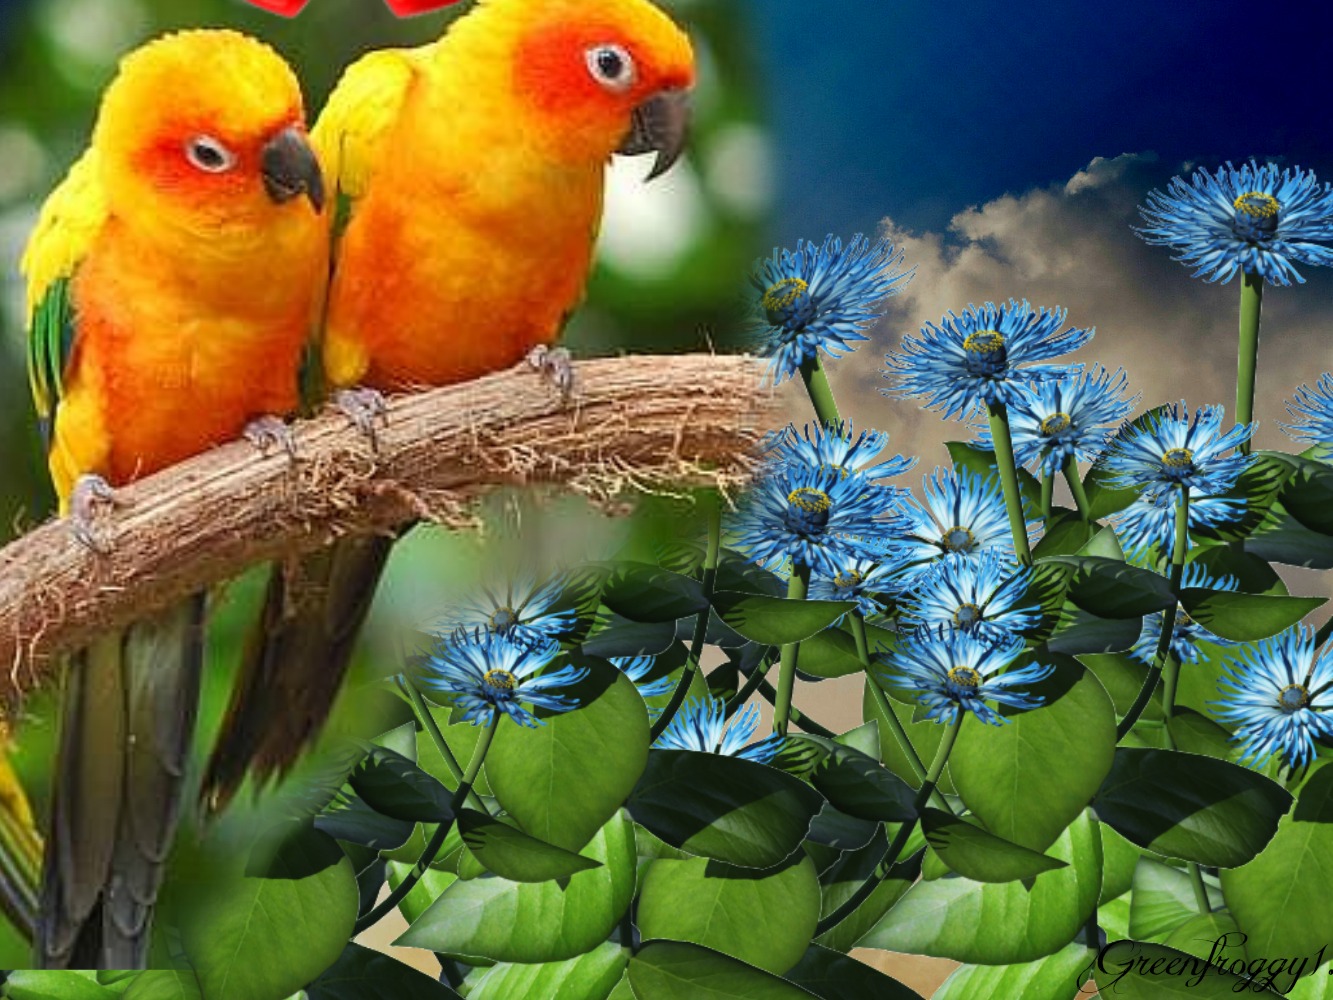 LOVE BIRDS Art - ID: 64399
